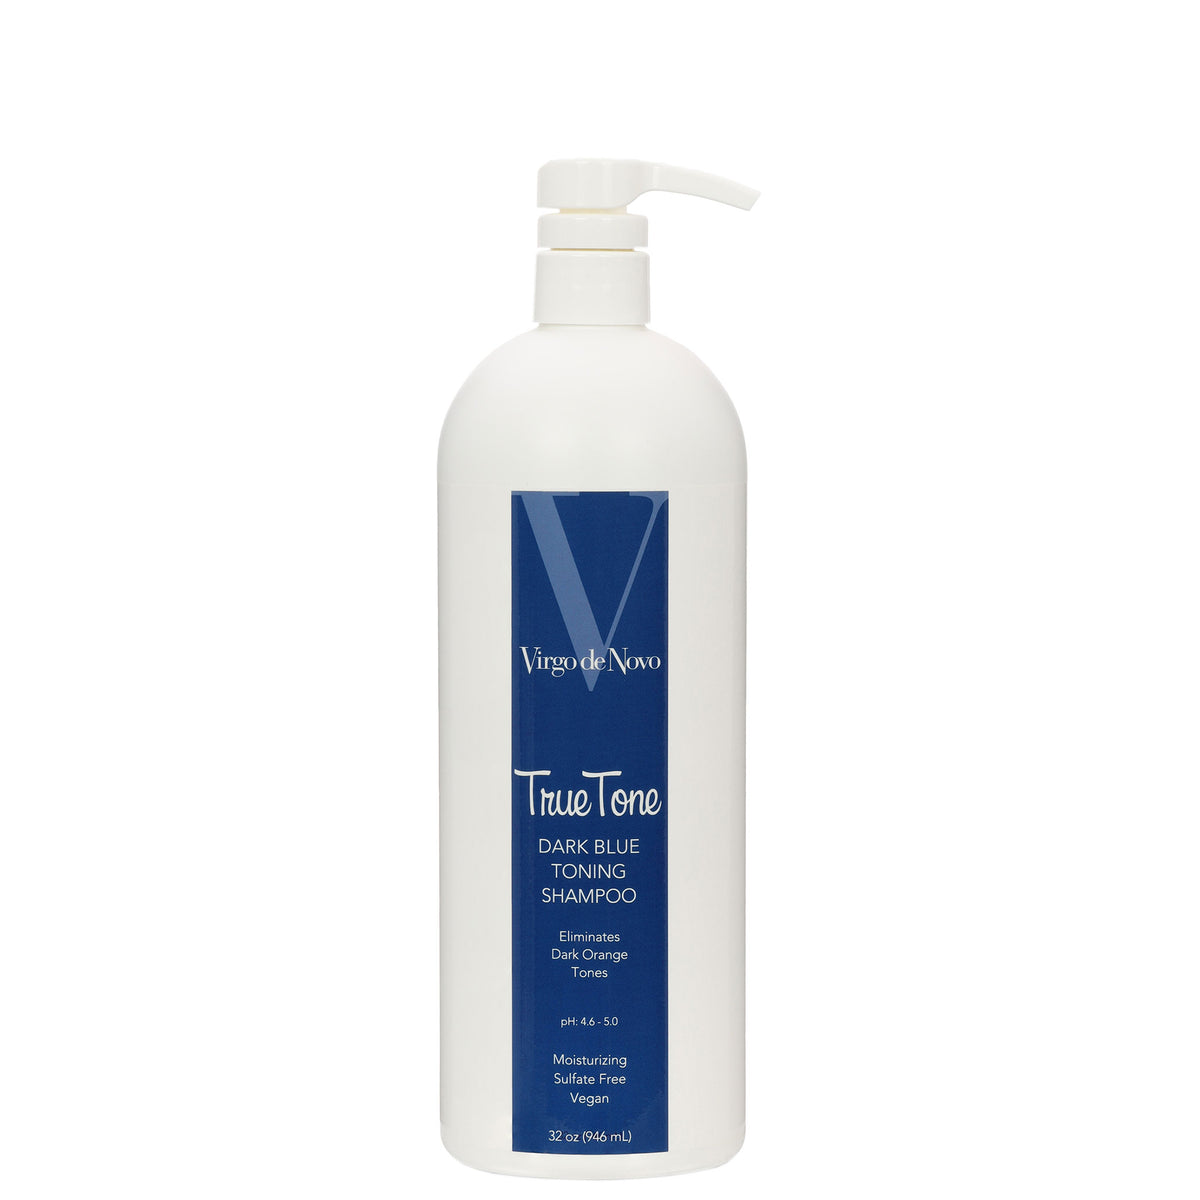 True Tone Dark Blue Toning Shampoo